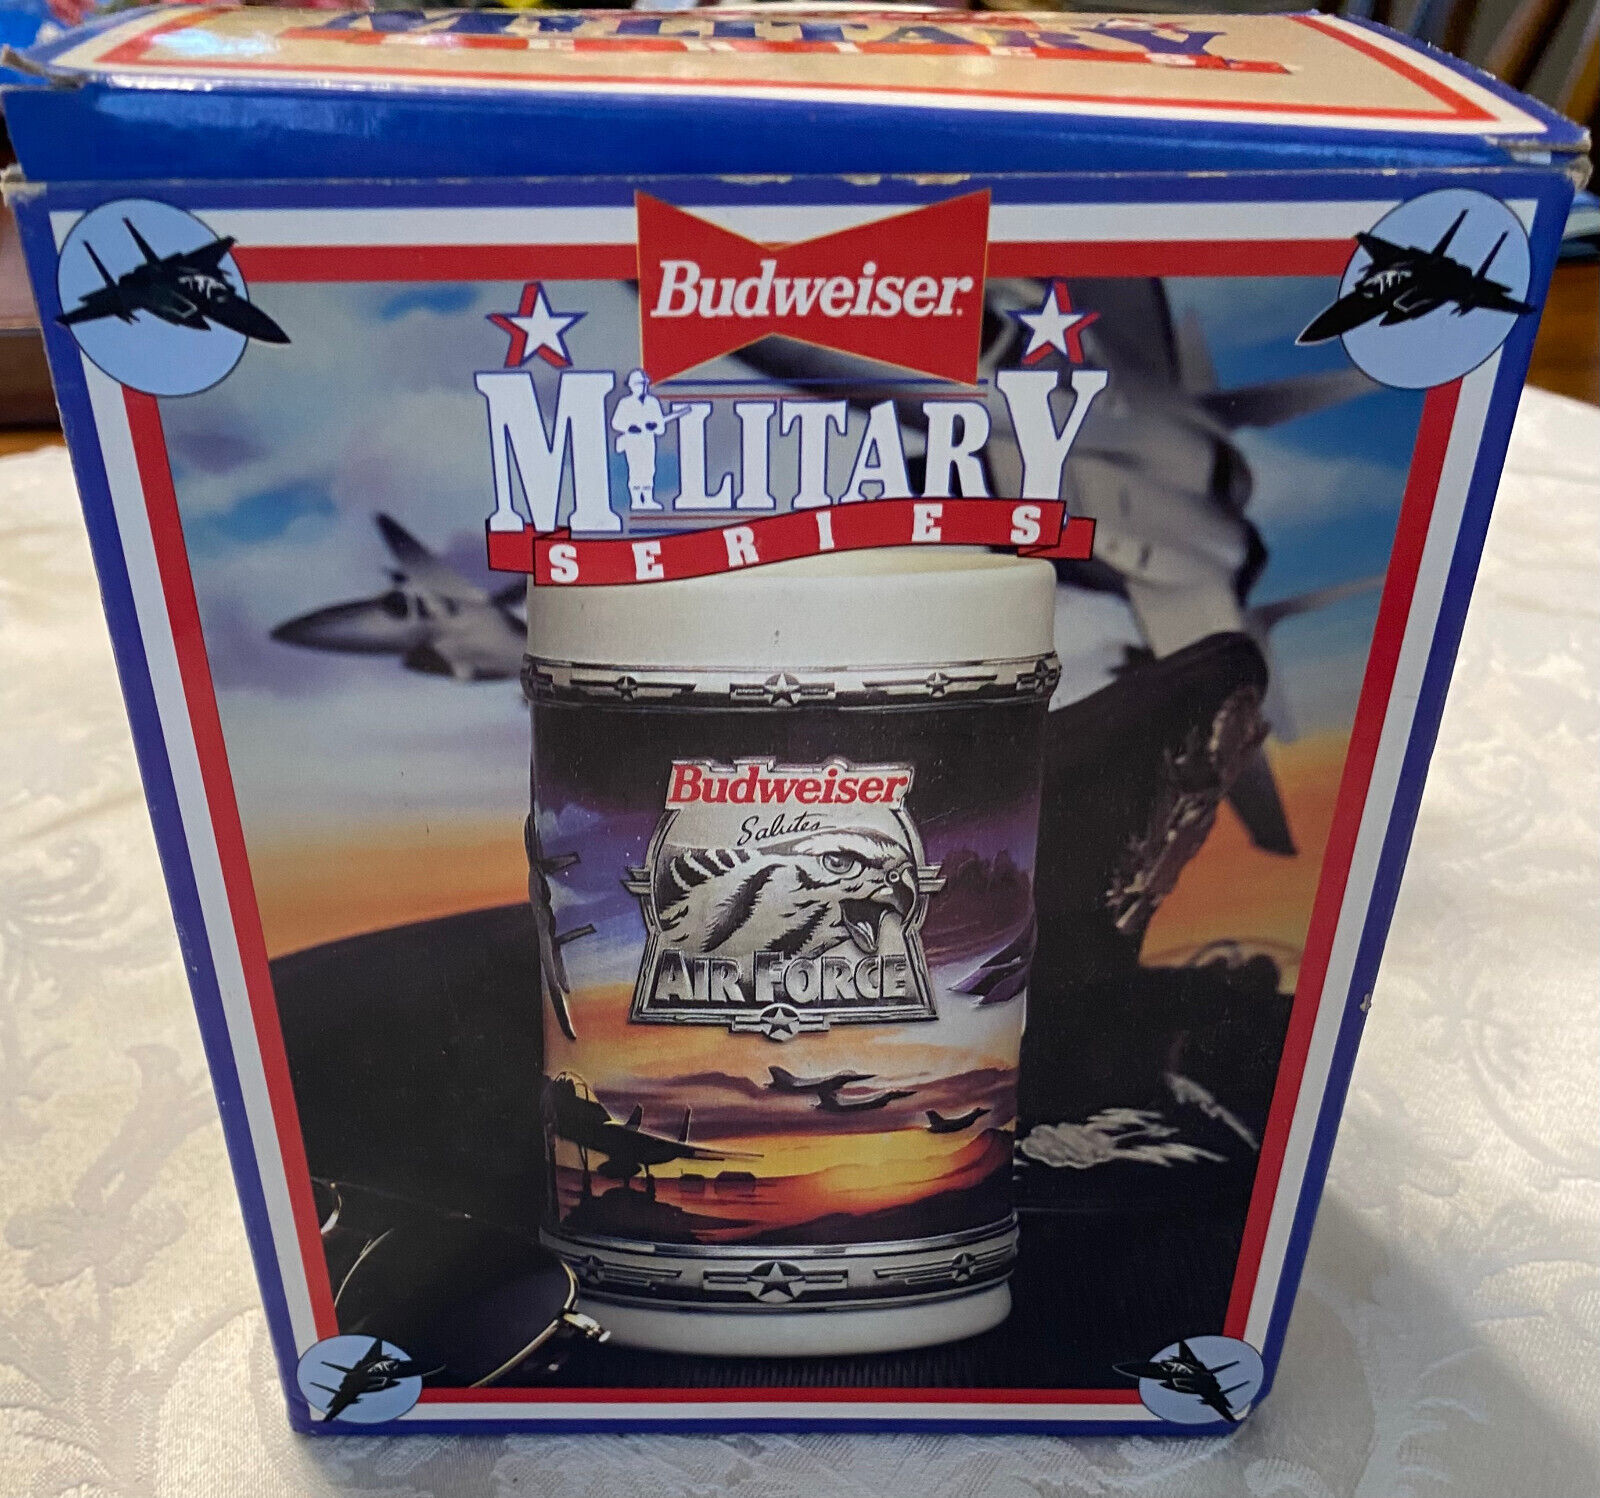 Vintage 1993, Budweiser Military Series Salutes Air Force Beer Stein Mug, NOS